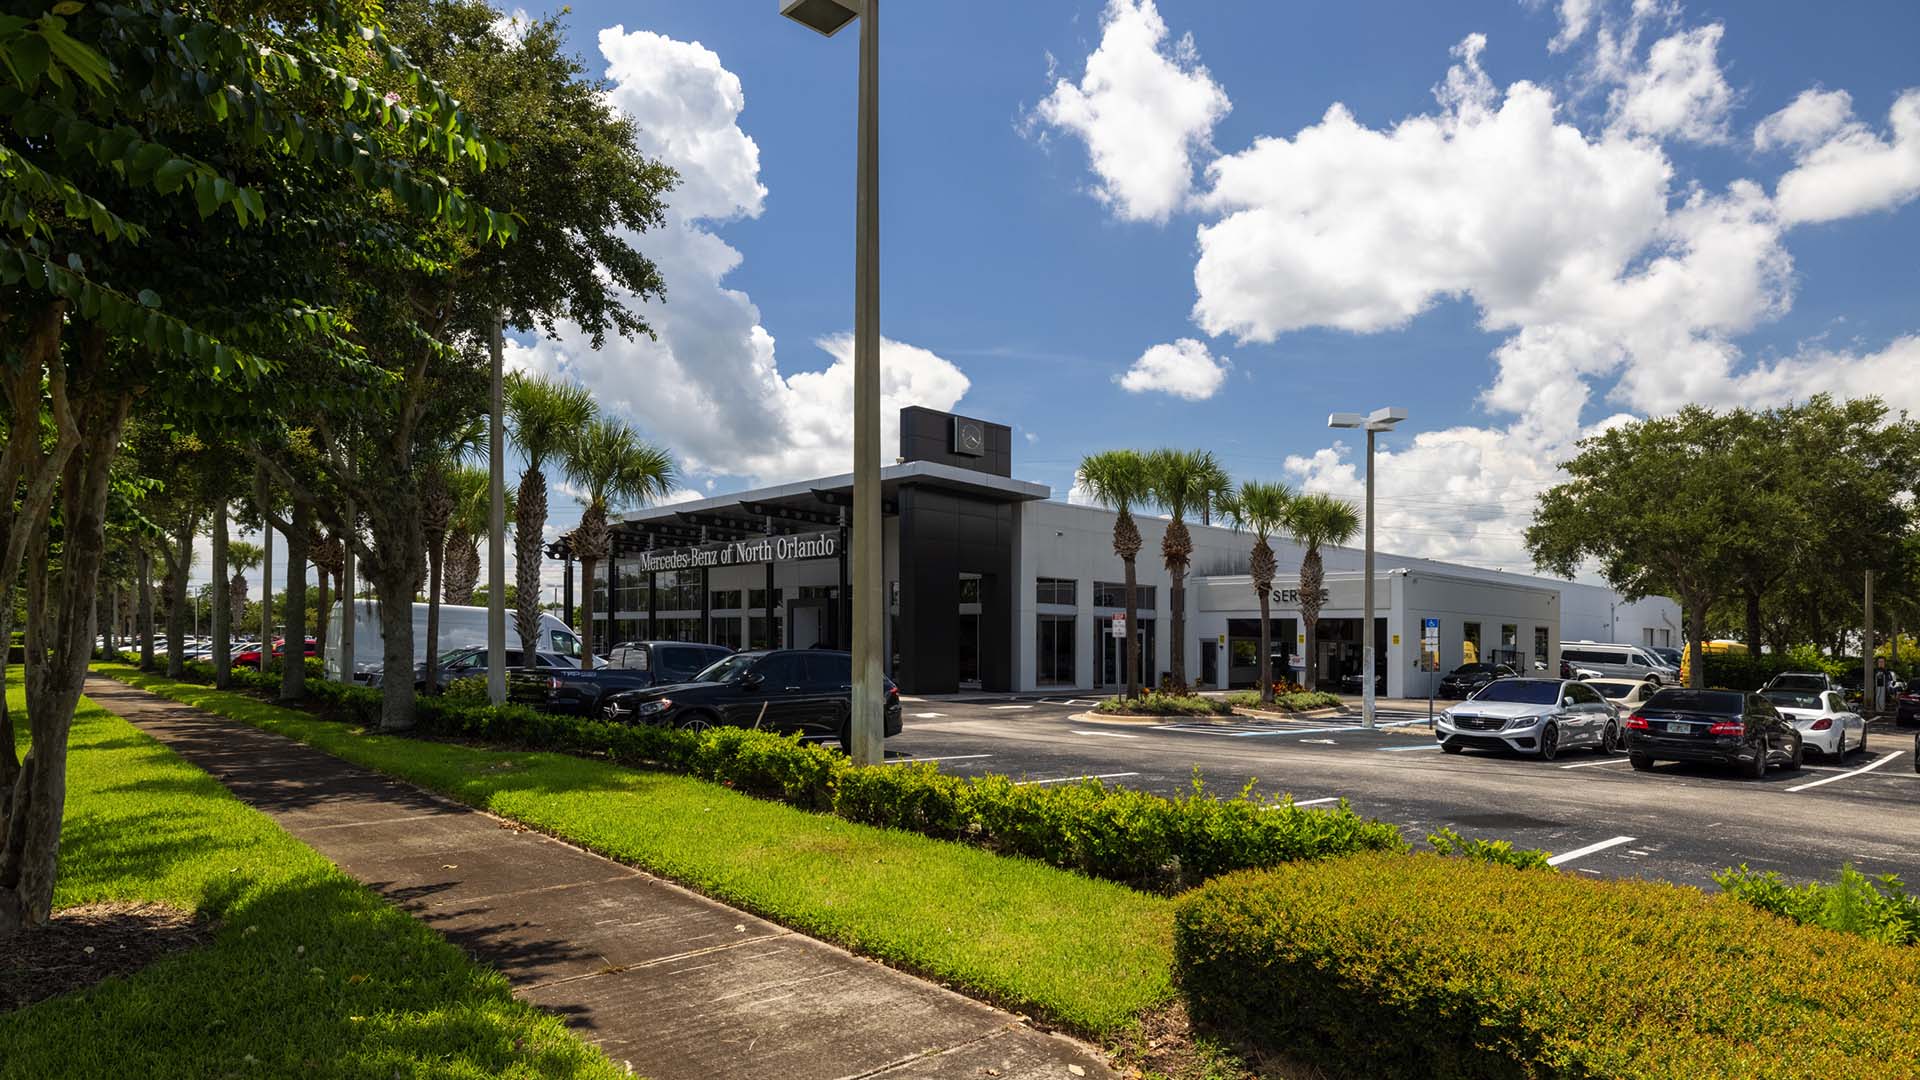 Exterior view of Mercedes-Benz of North Orlando